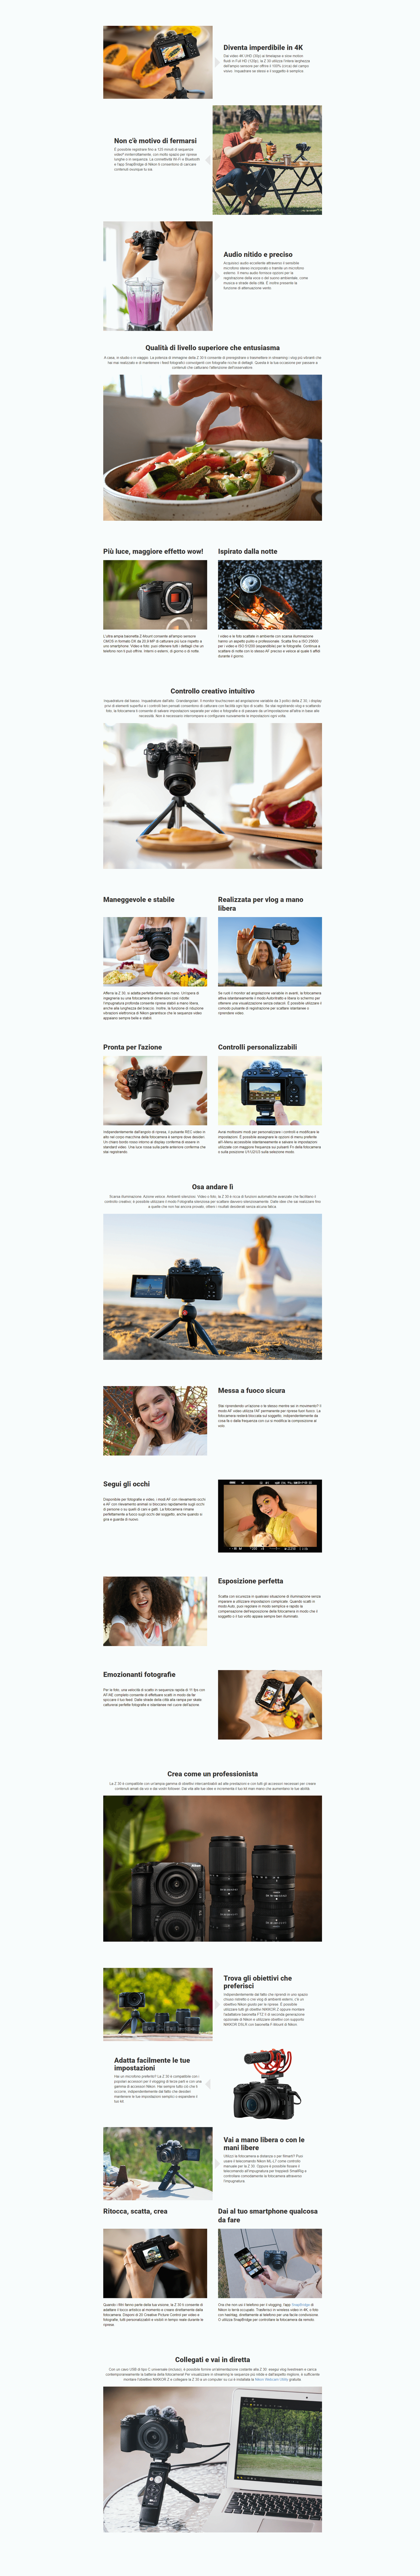 Template Nikon Z30 + 16-50mm f/3.5-6.3 VR + Lexar SD 64GB 800x